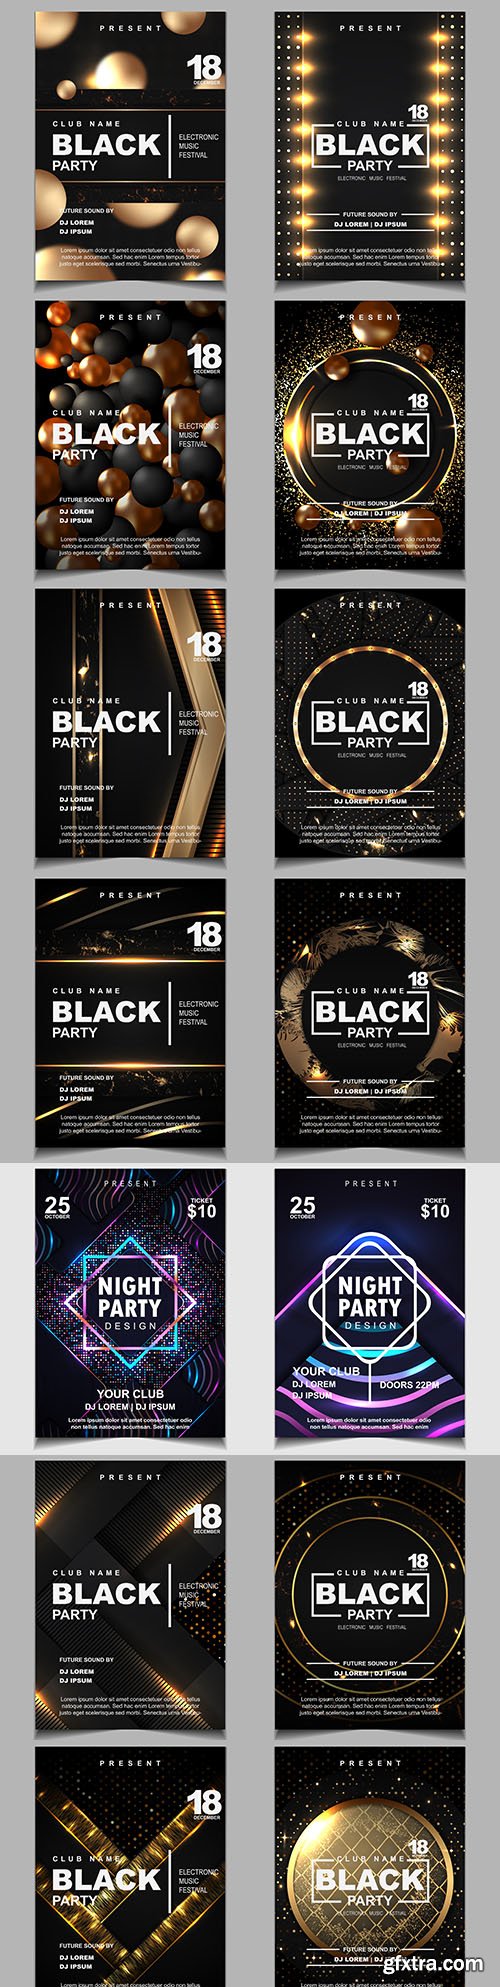 Black and gold nightclub flyer design poster